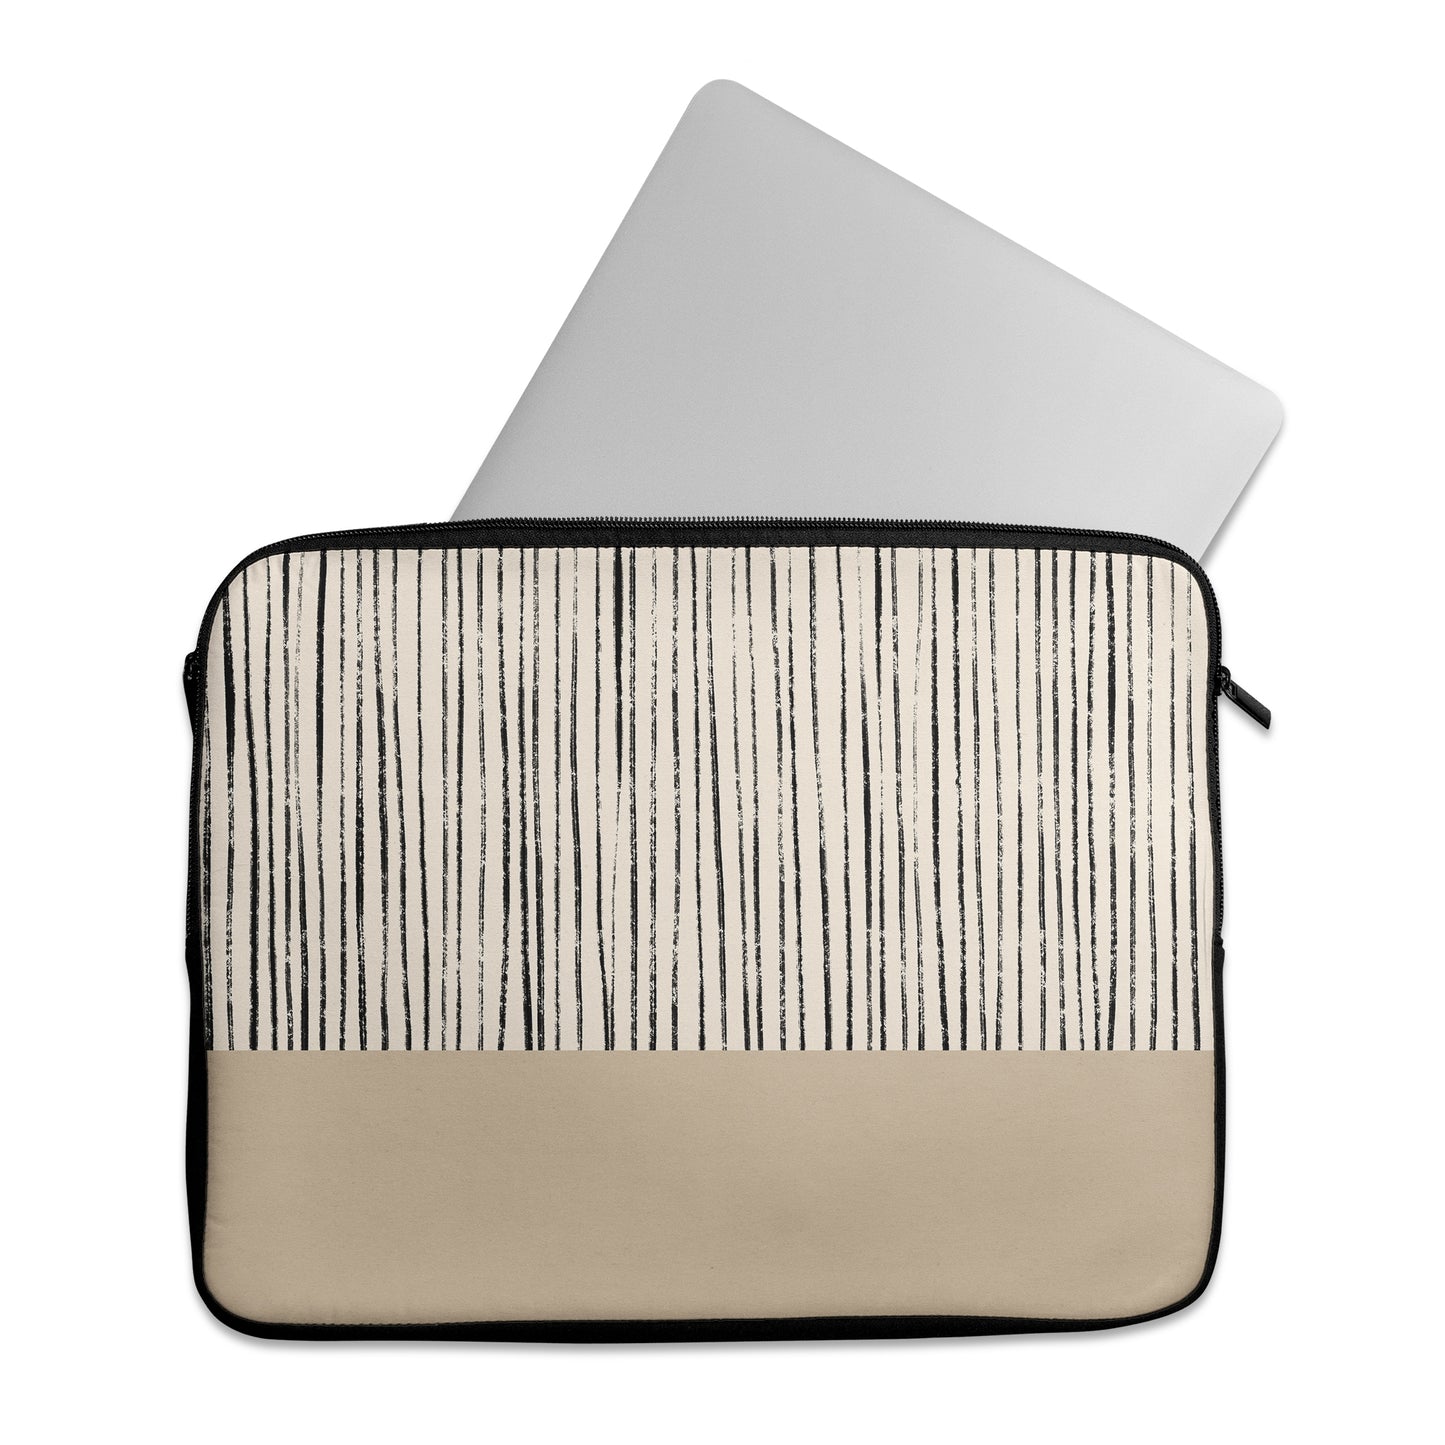 Beige Minimalist Striped Art - Laptop Sleeve